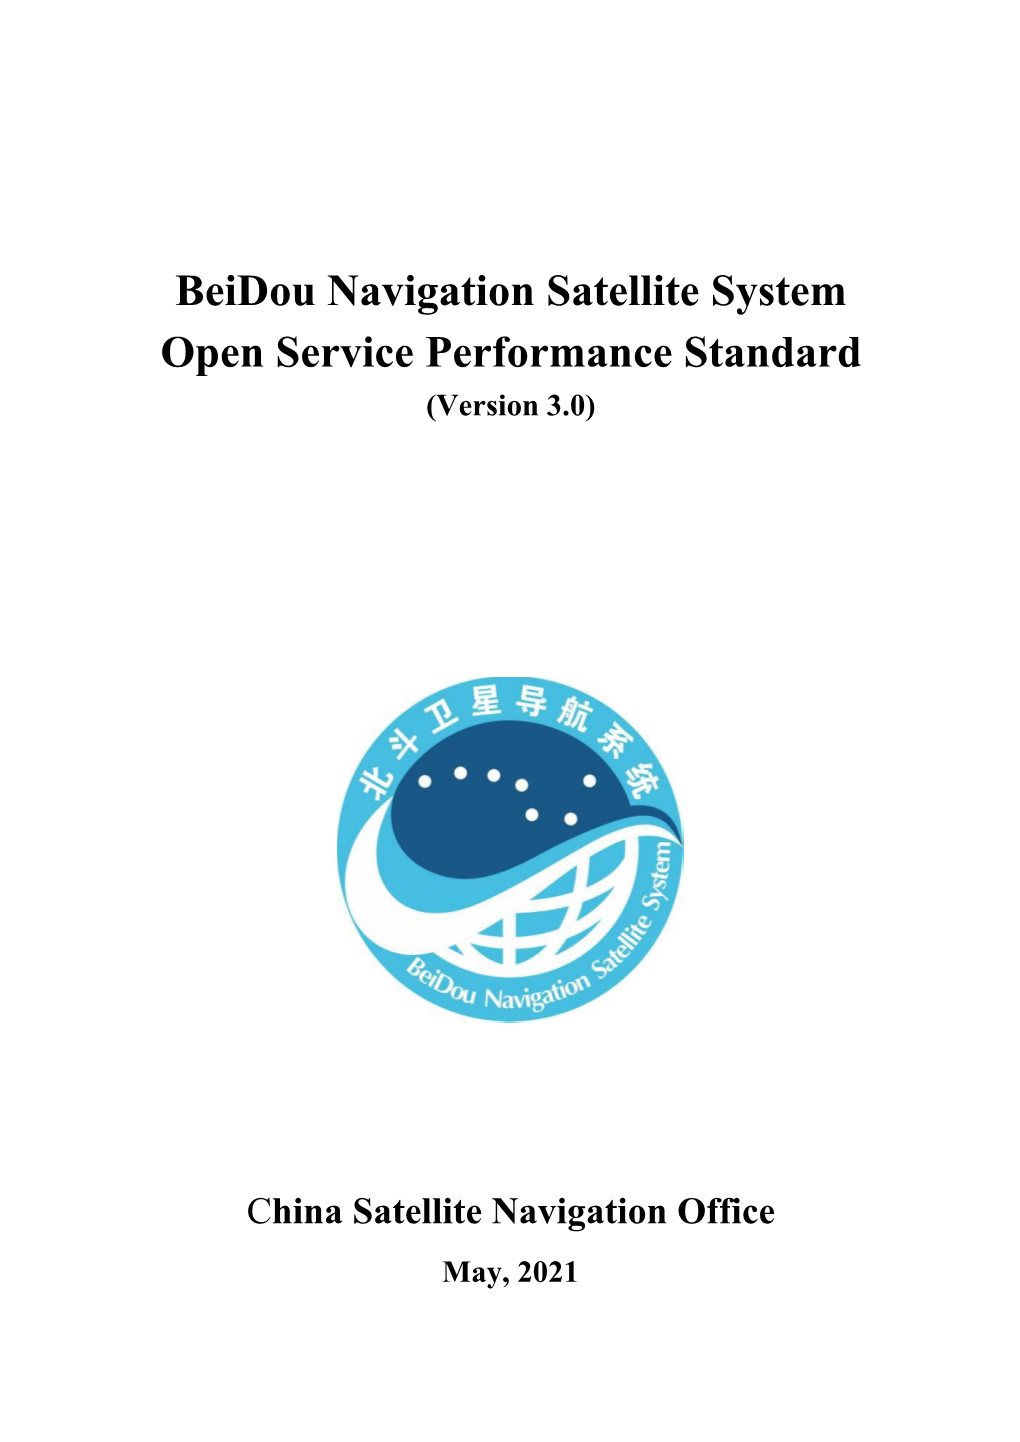 Beidou Navigation Satellite System Open Service Performance Standard (Version 3.0)